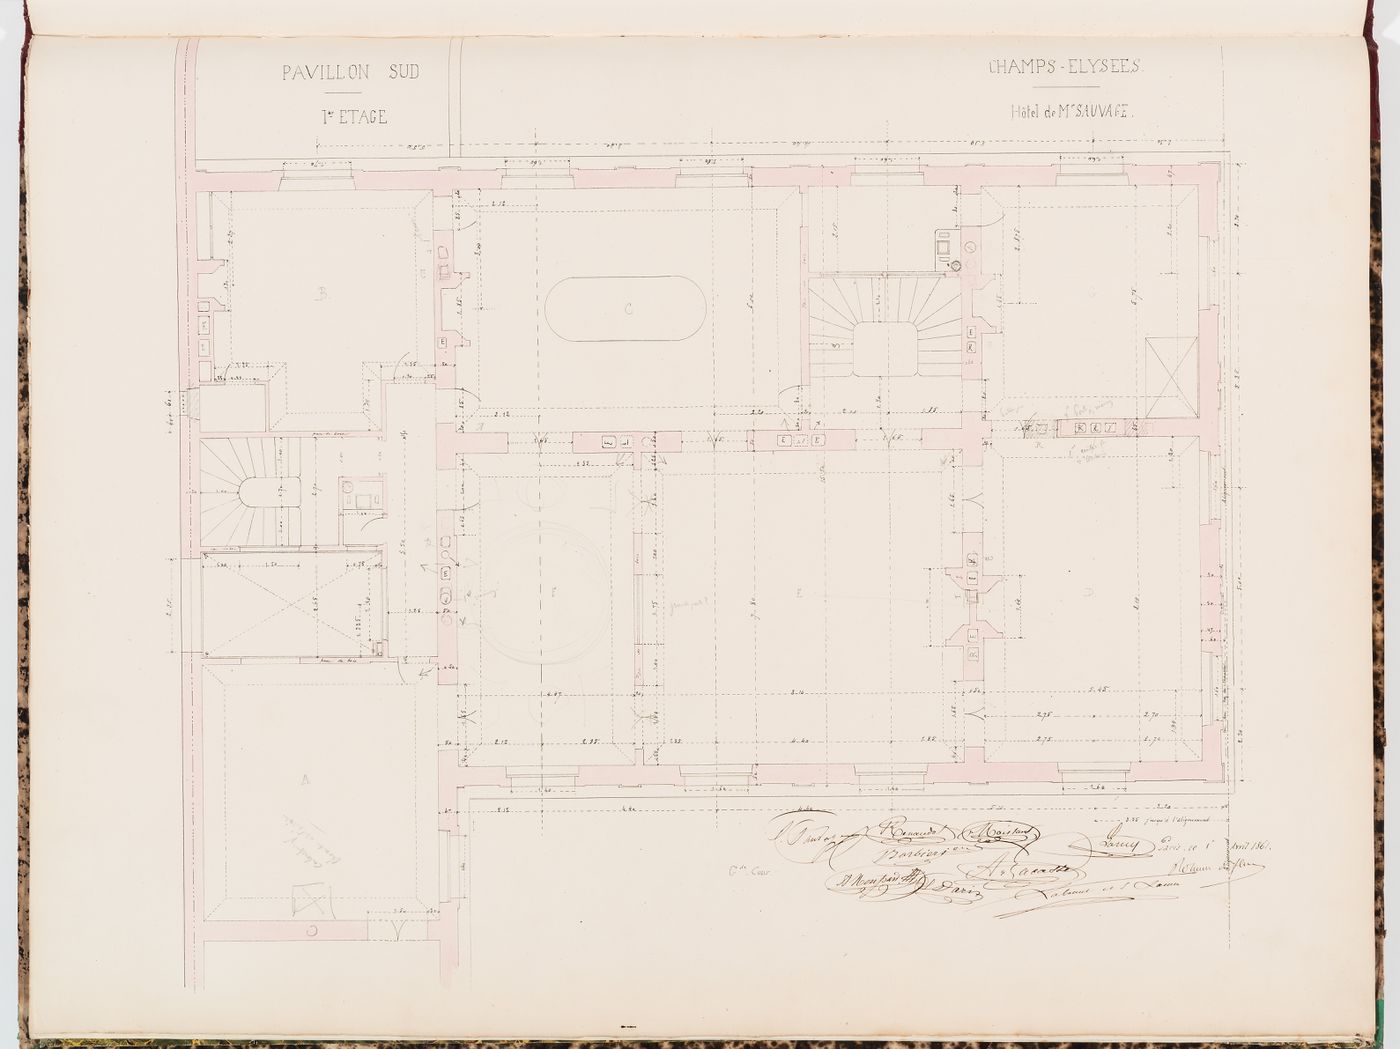 First floor plan for the "pavillon sud" for Hôtel Sauvage, Paris